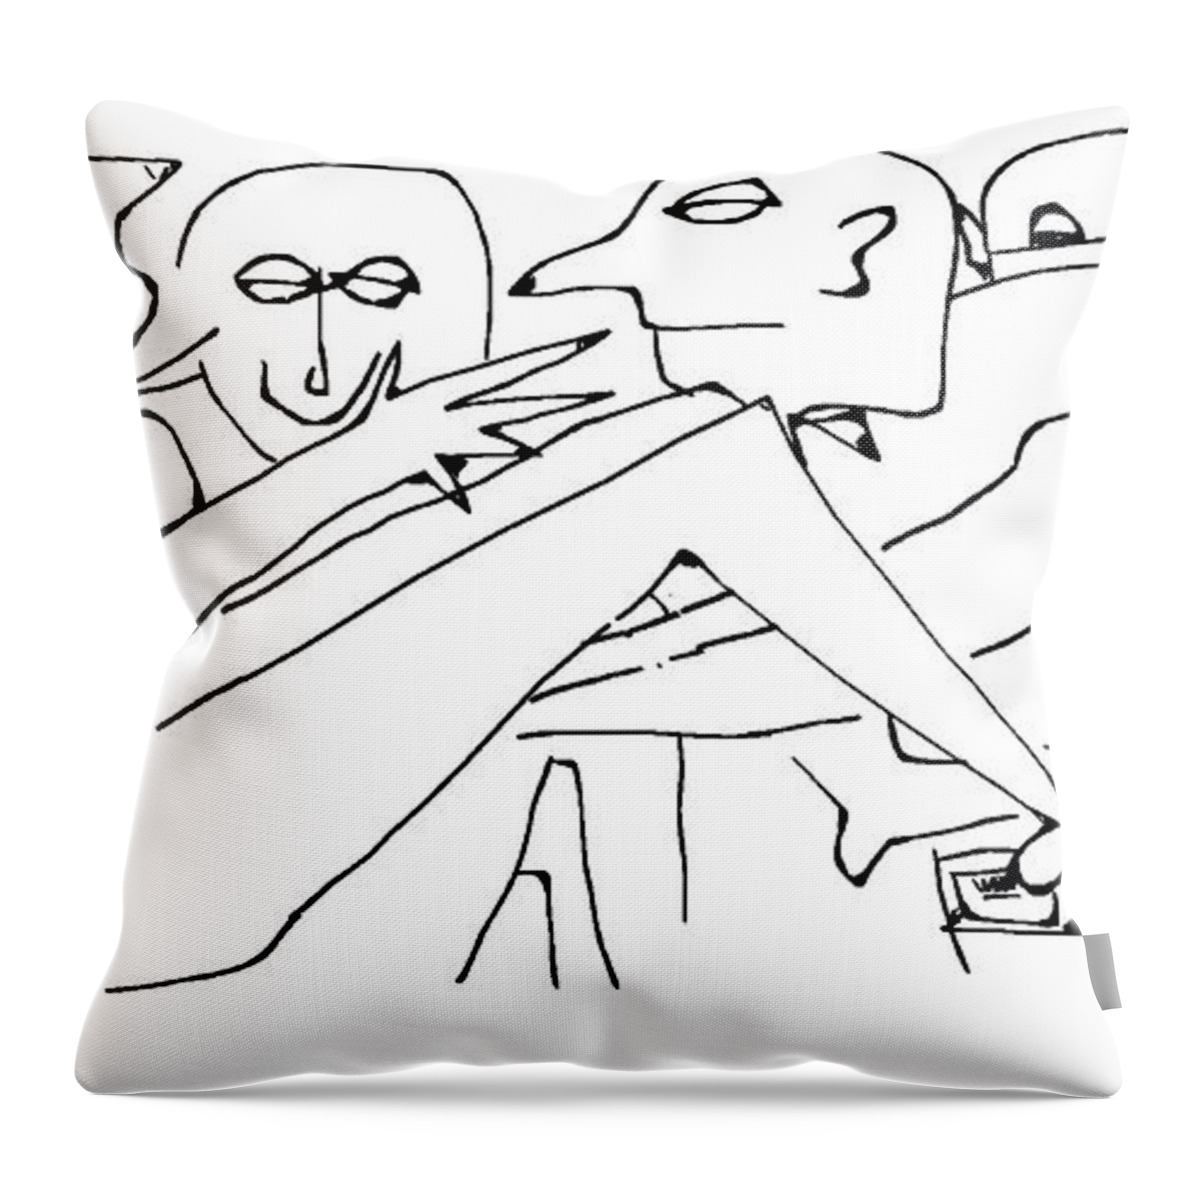  Throw Pillow featuring the digital art Gynecologist- Med School by Doug Duffey